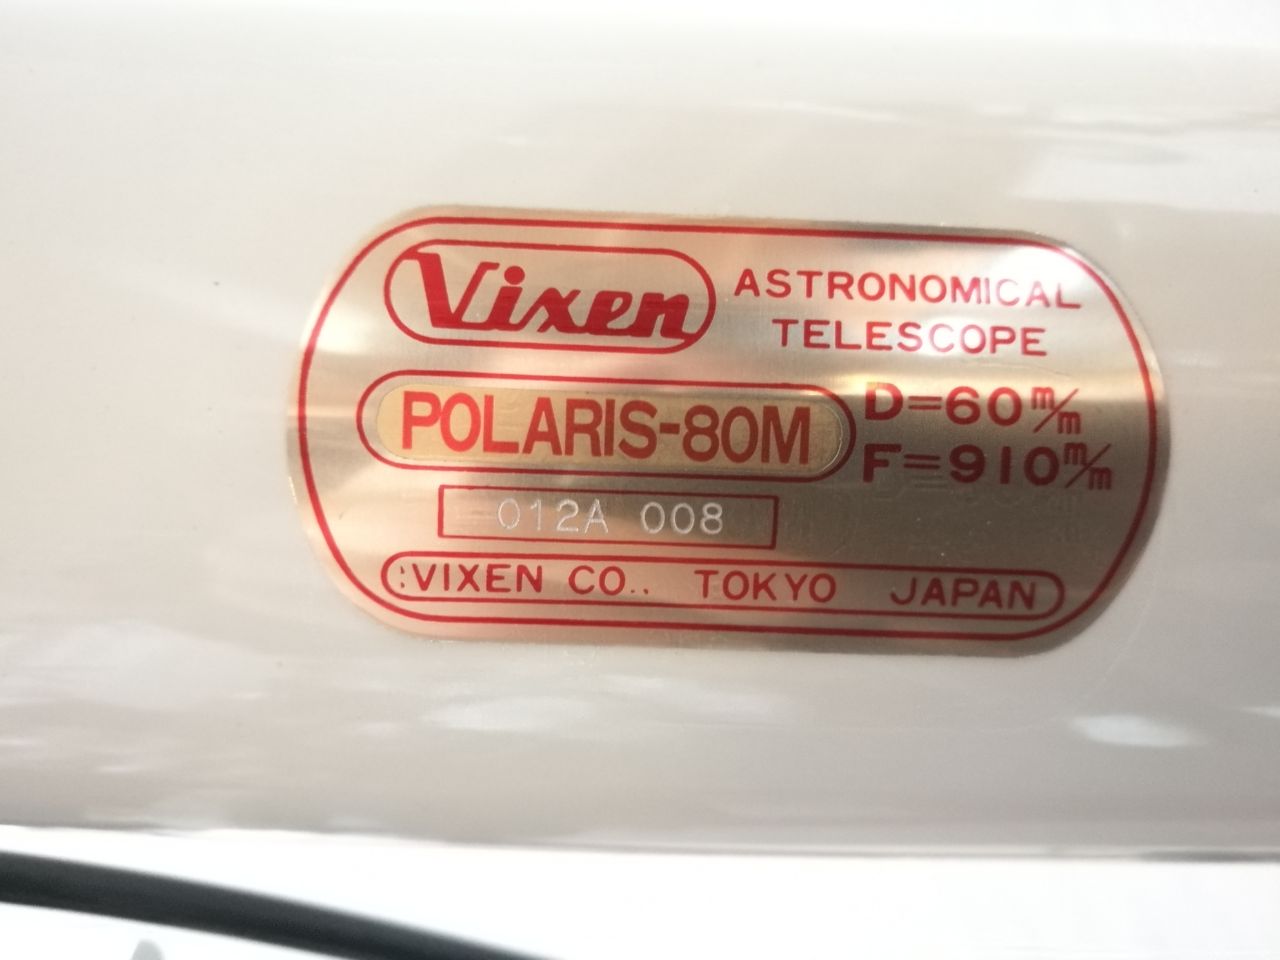 Vixen Polaris-80M - nice details - Classic Telescopes - Cloudy Nights